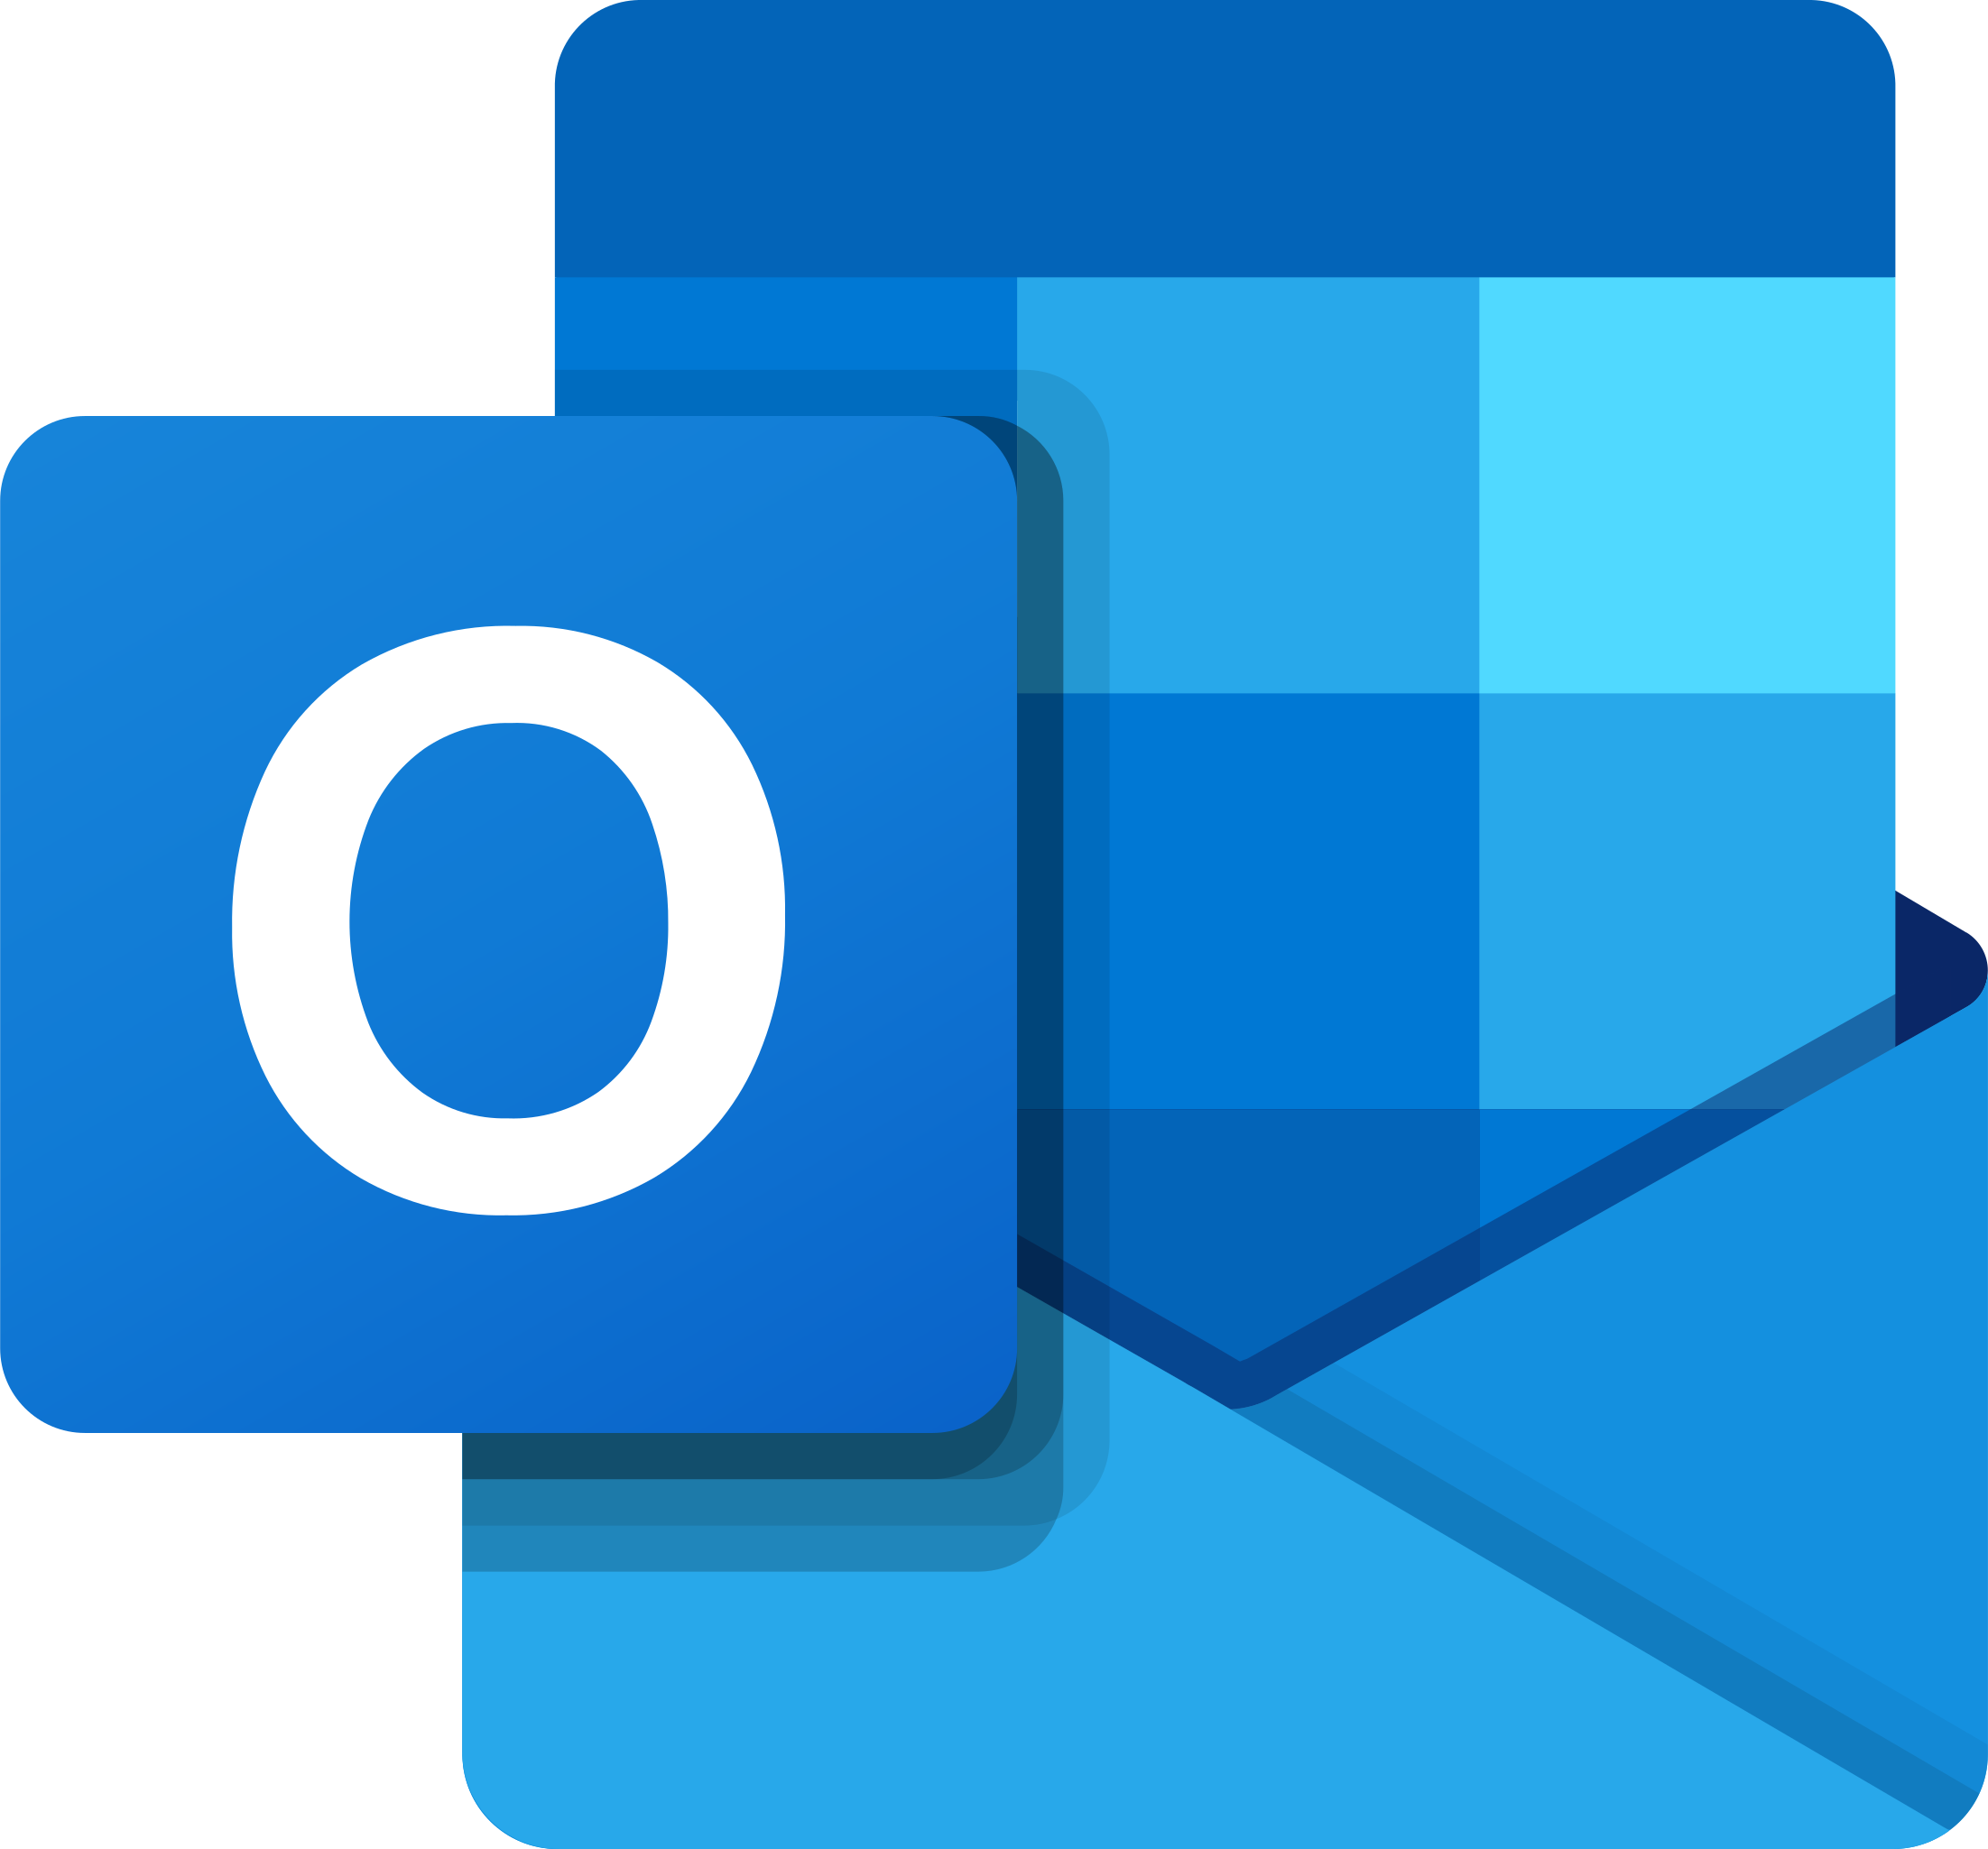 Microsoft Outlook and Windows logo